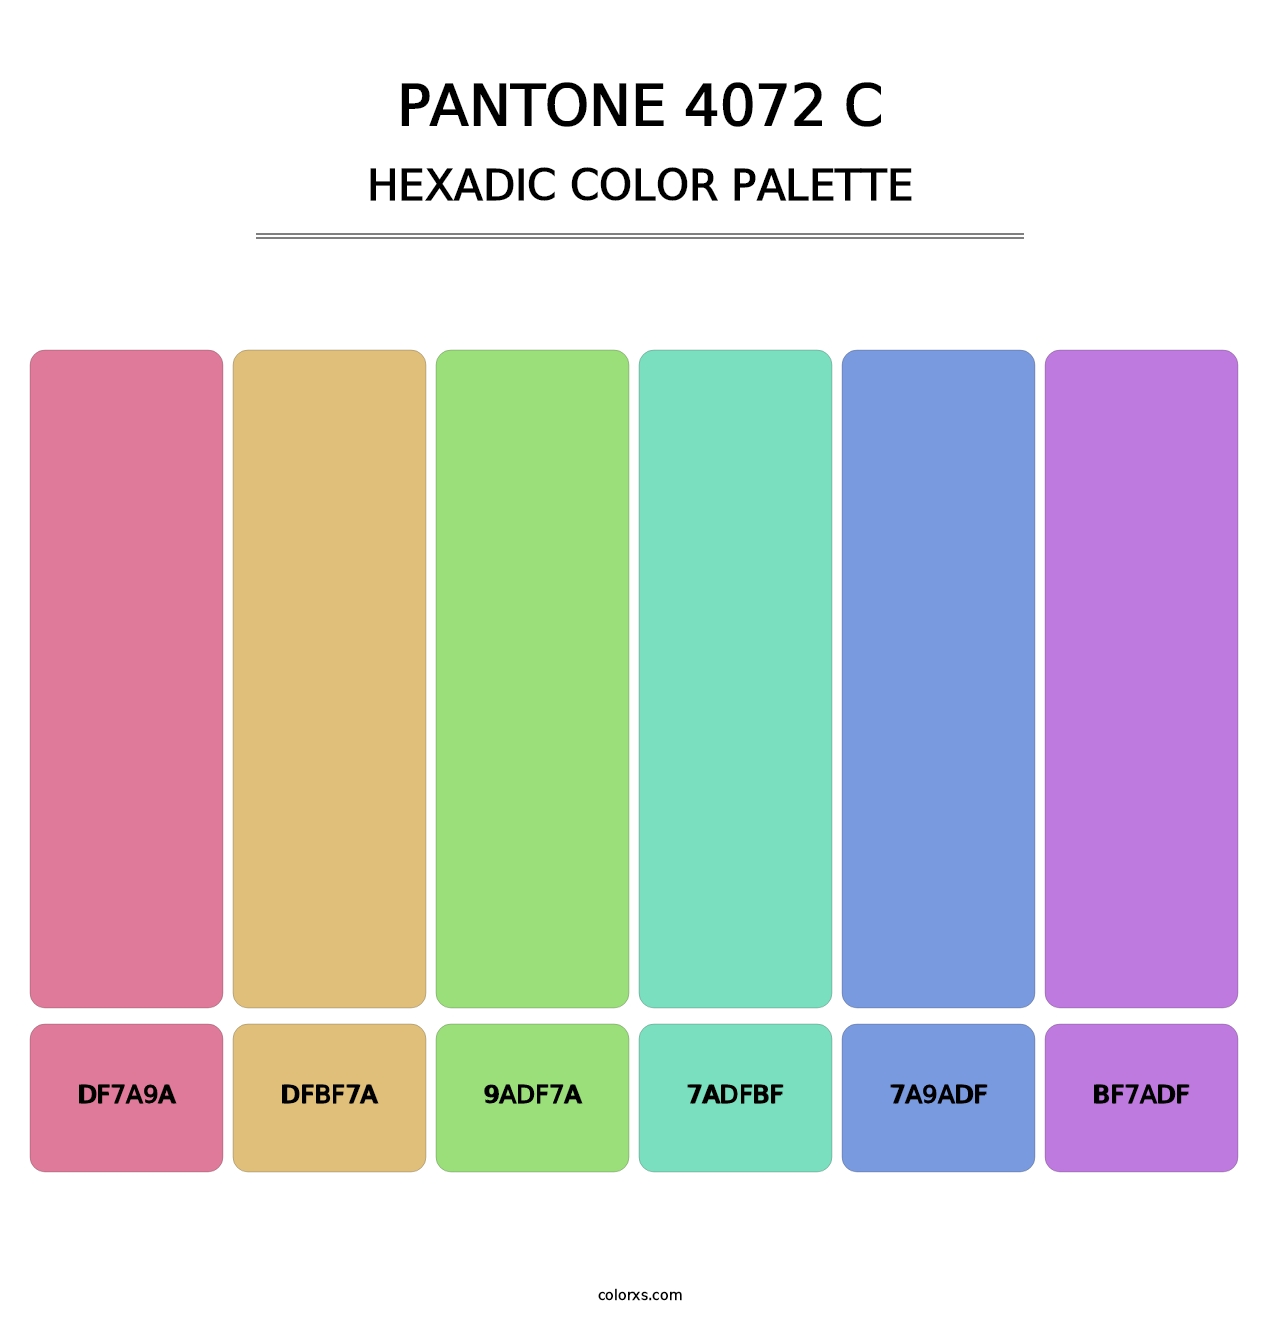 PANTONE 4072 C - Hexadic Color Palette